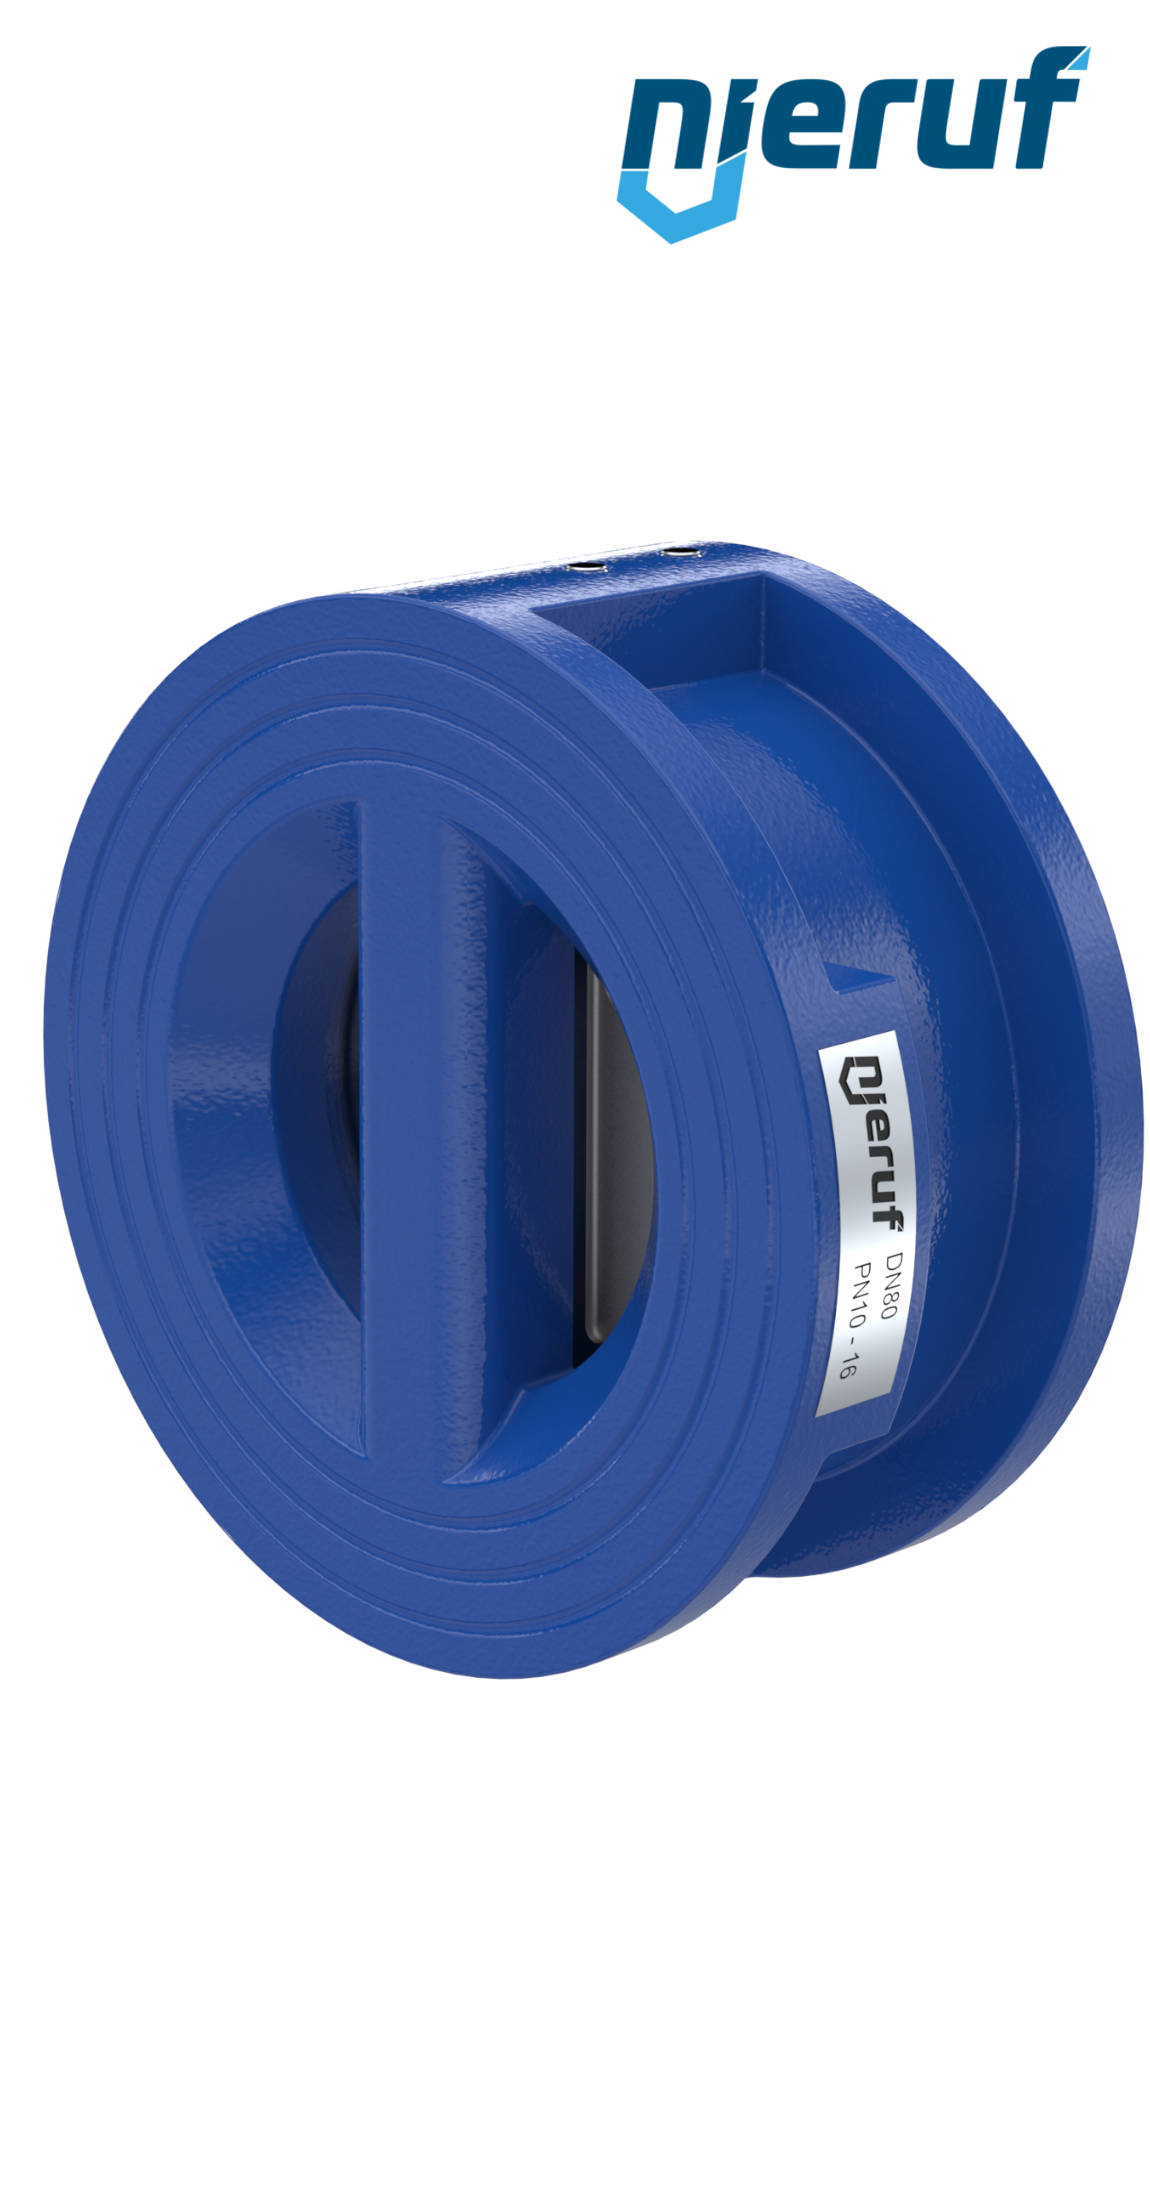 dual plate check valve DN80 DR01 GGG40 epoxyd plated blue 180µm FKM (Viton)